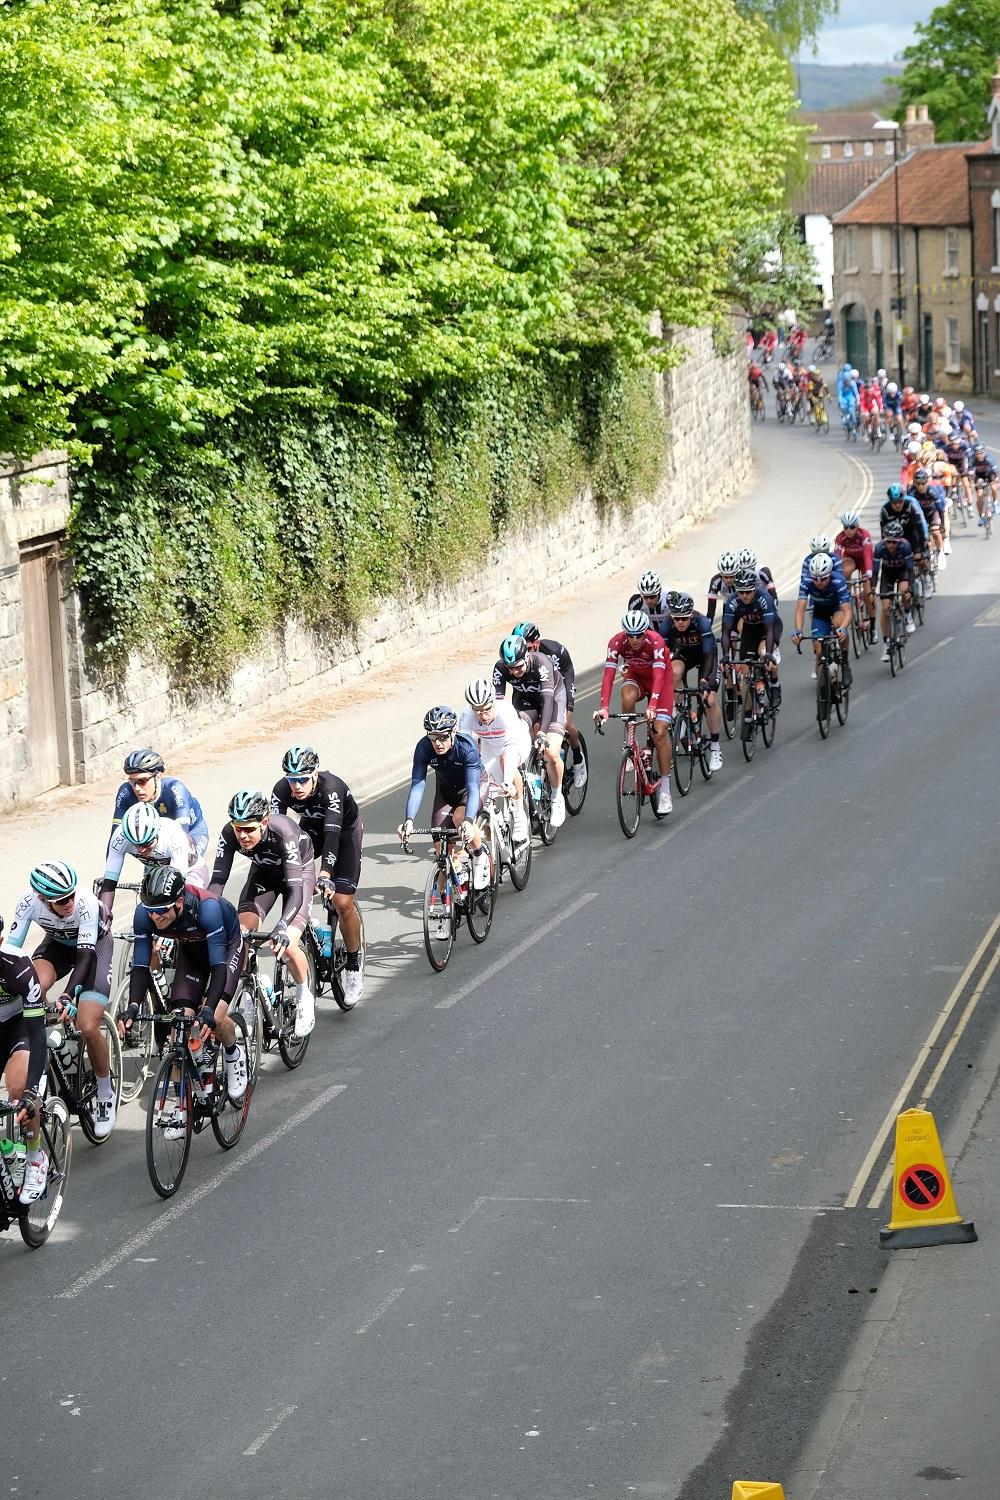 The cyclists in Castlegate, Malton.Photo: Andy Burden.